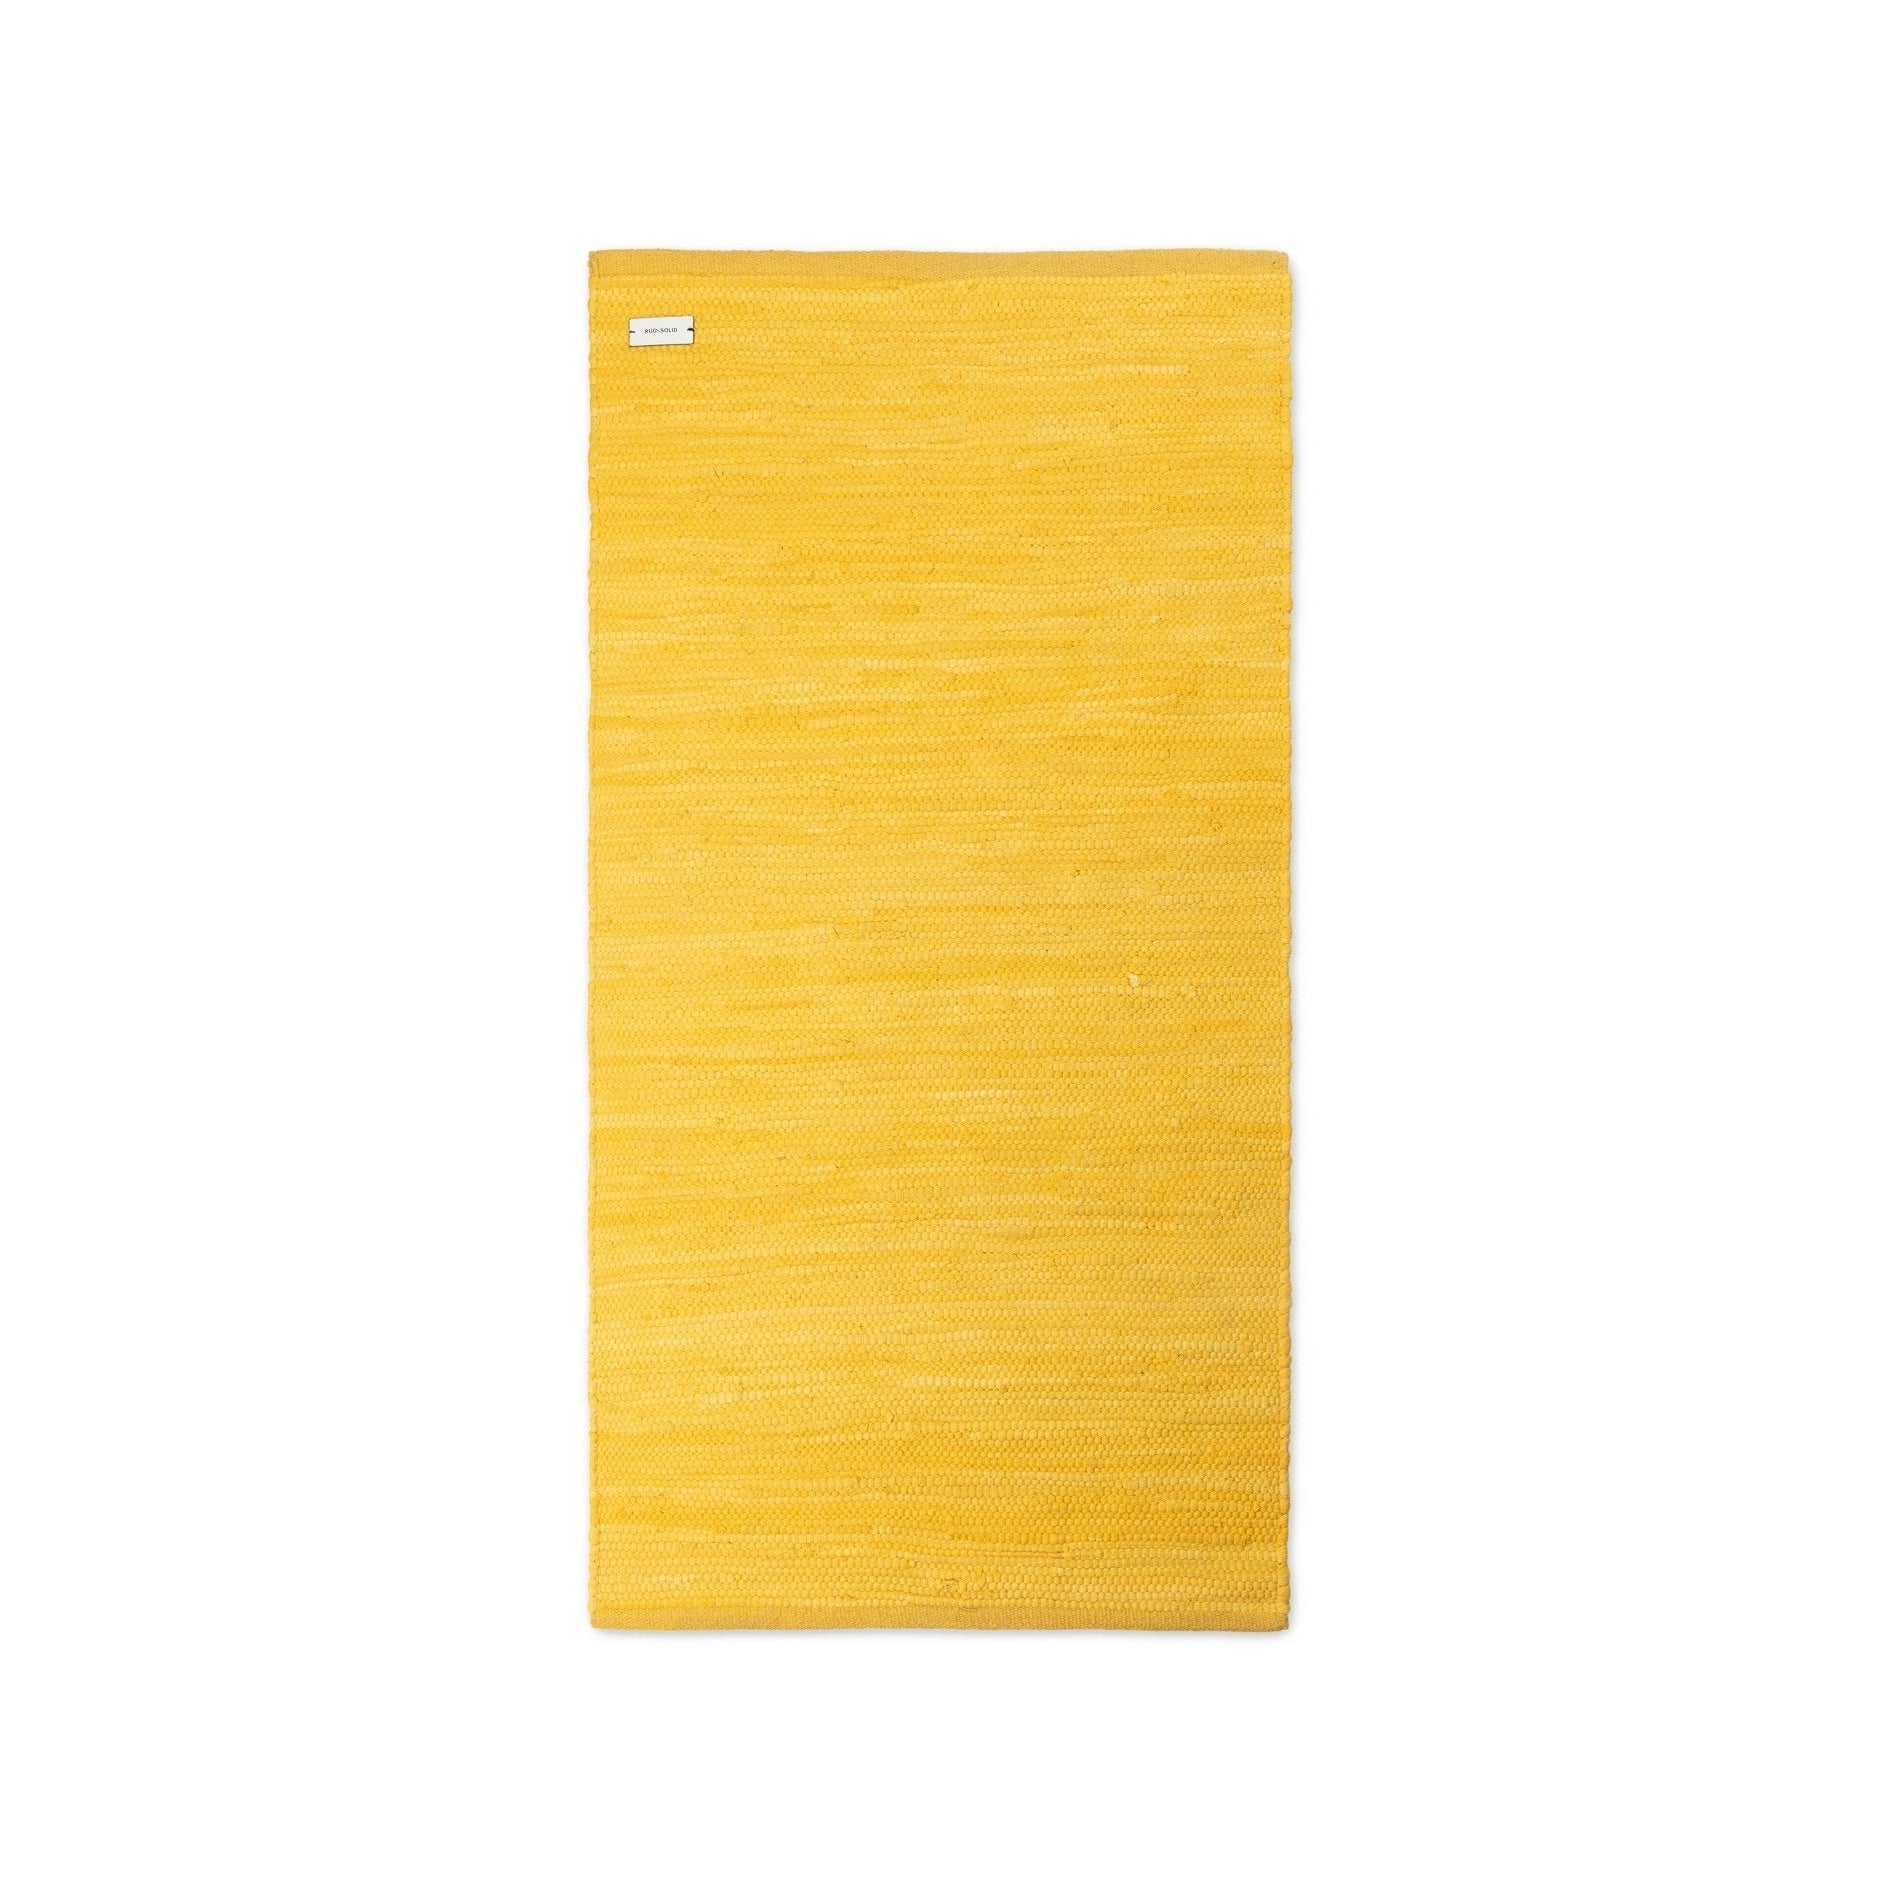 Rug Solid Bomullsmattan regnrock gul, 60 x 90 cm